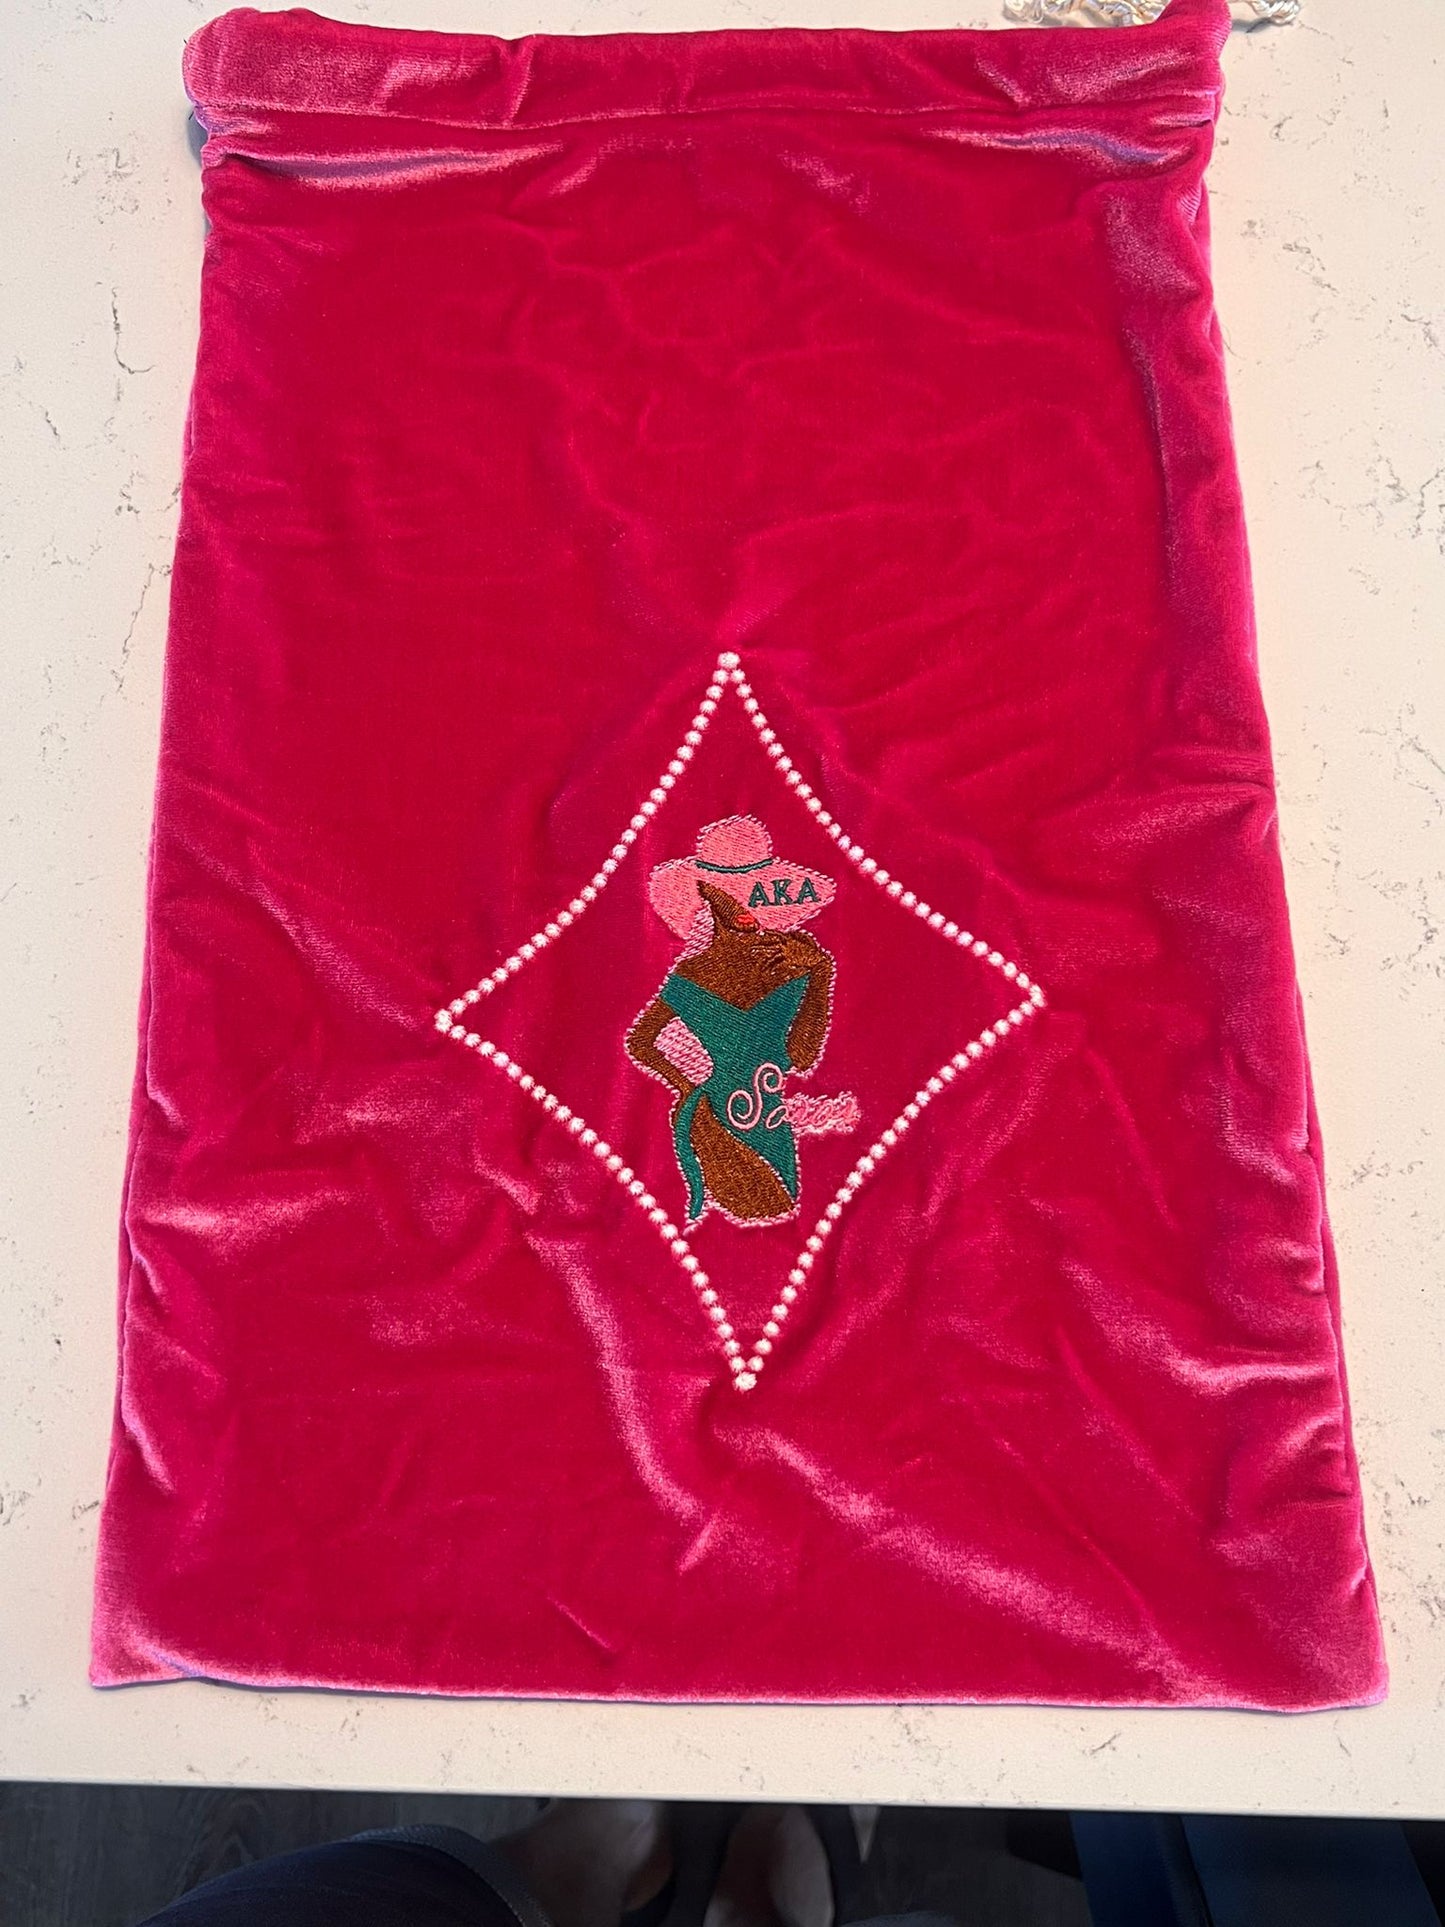 Alpha Kappa Alpha Avatar (Brown) - Velour Shoe Bag (Pink) - AS IS